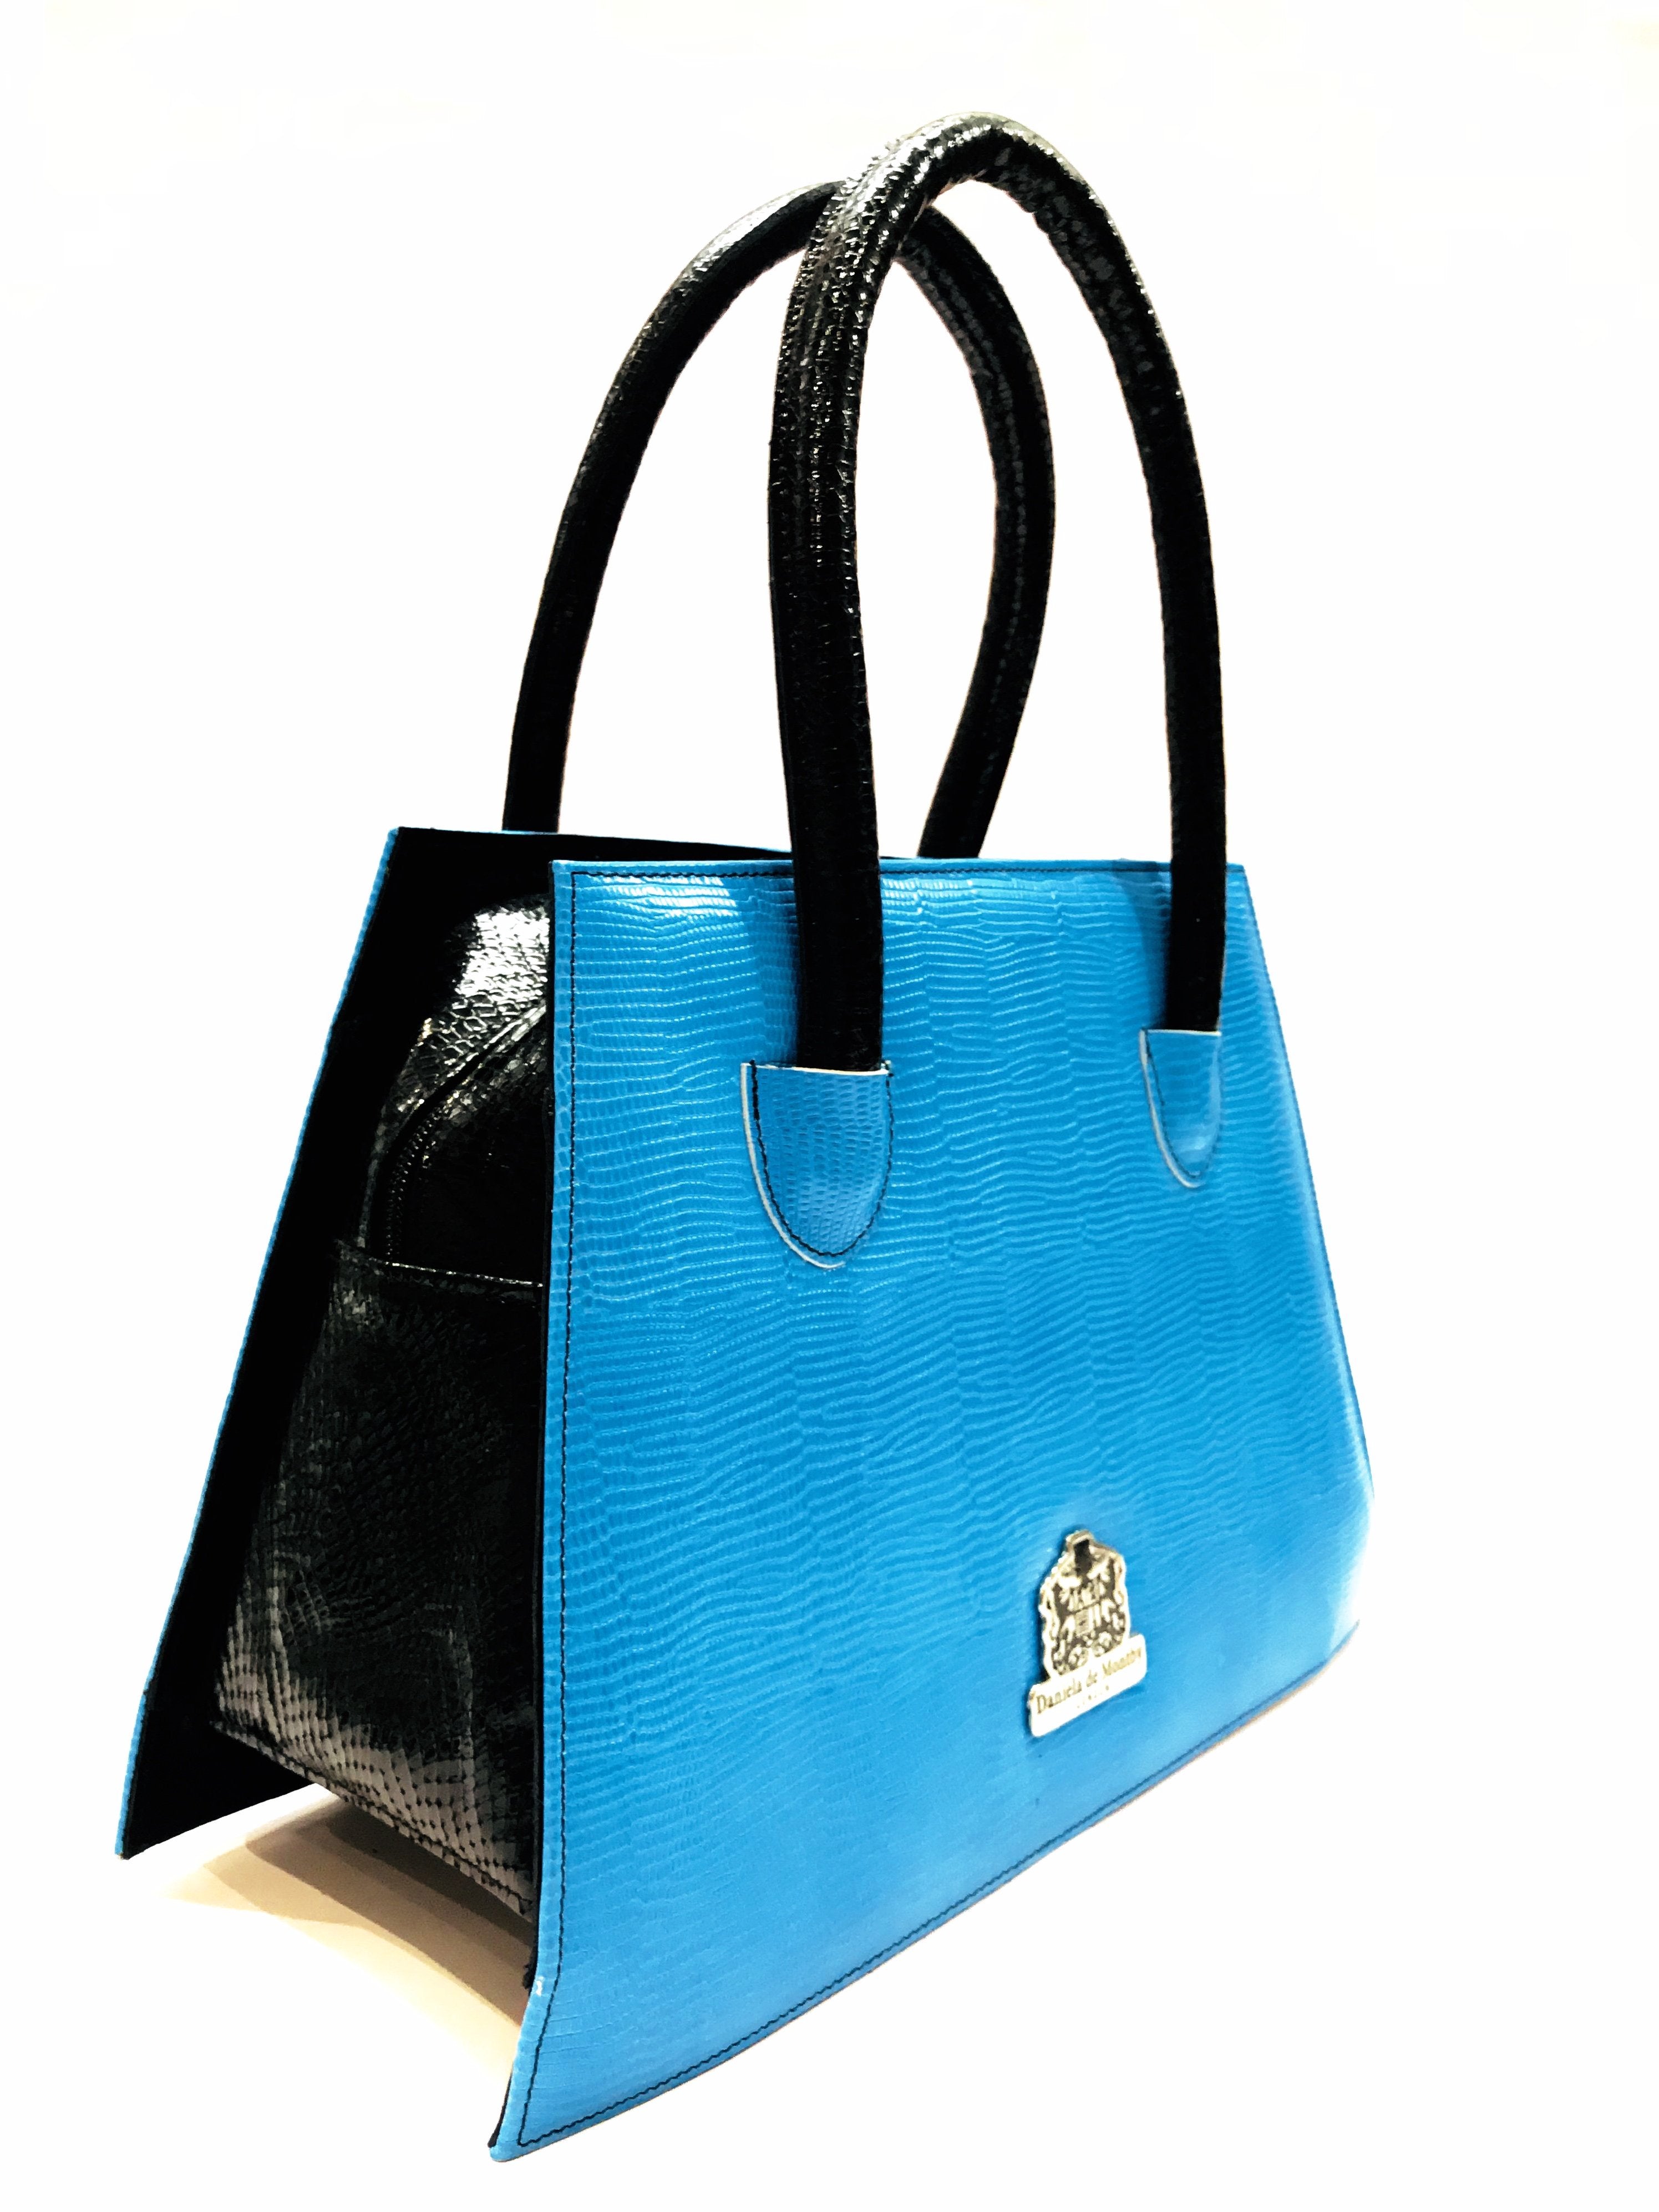 Turquoise Texture Wonder Bag Black Handles